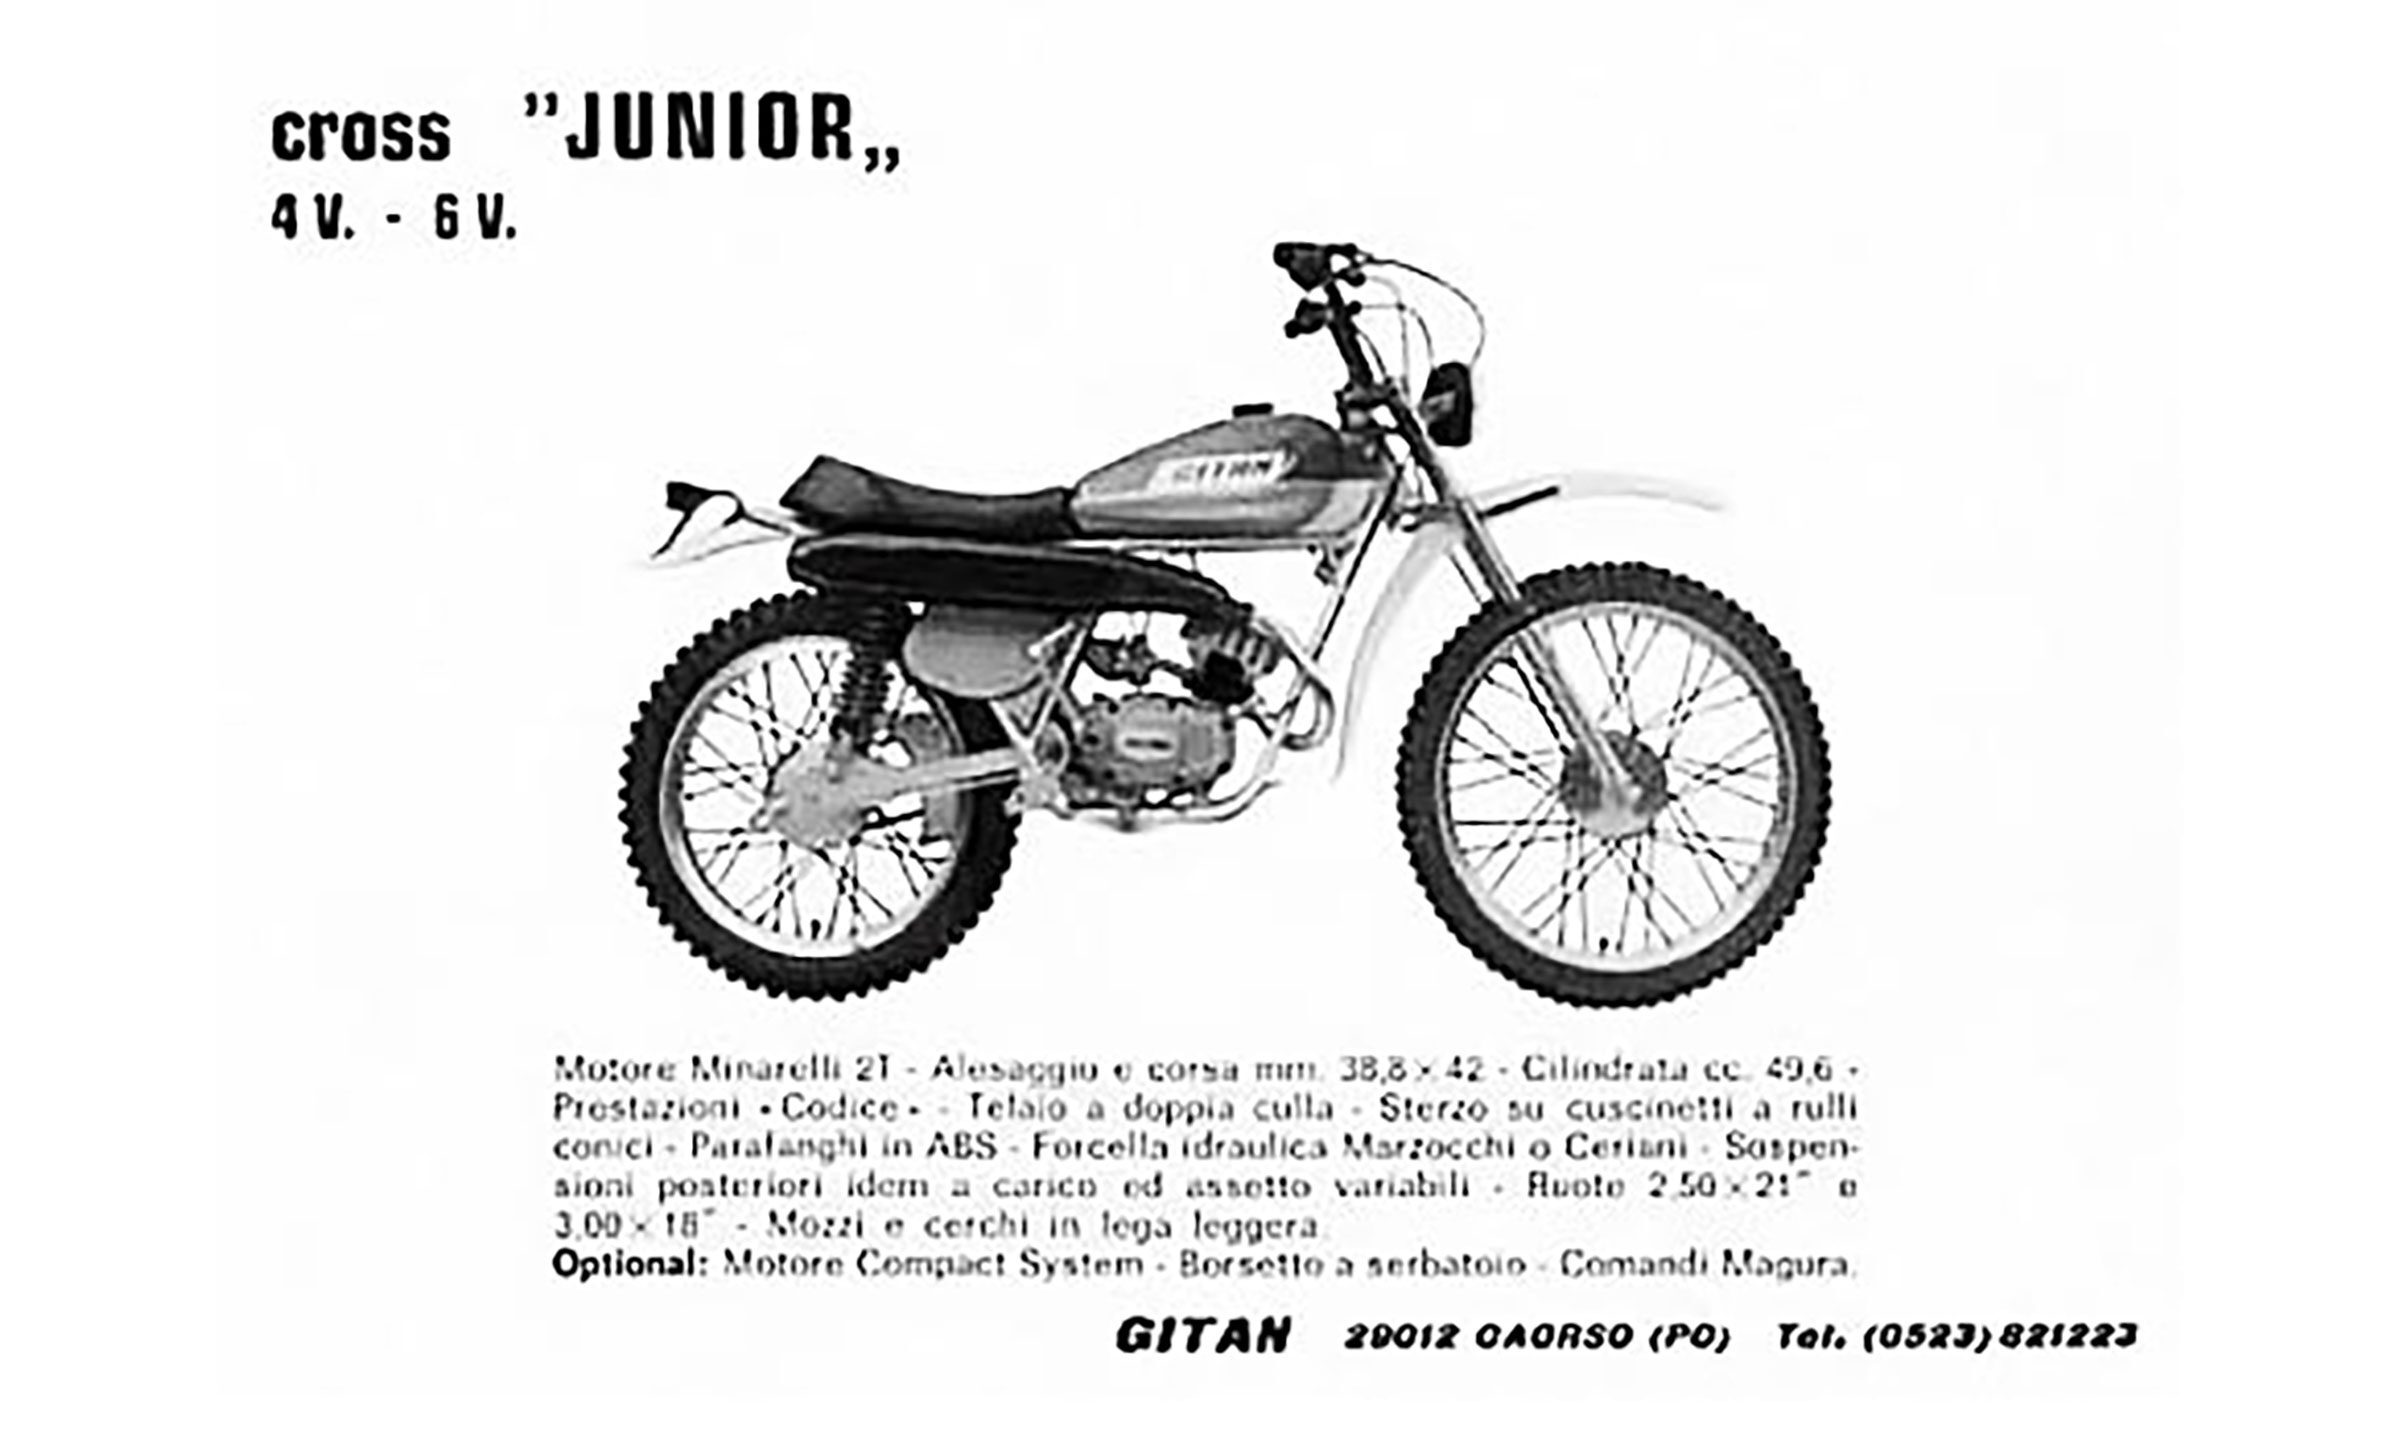 Gitan cross junior 1976 12